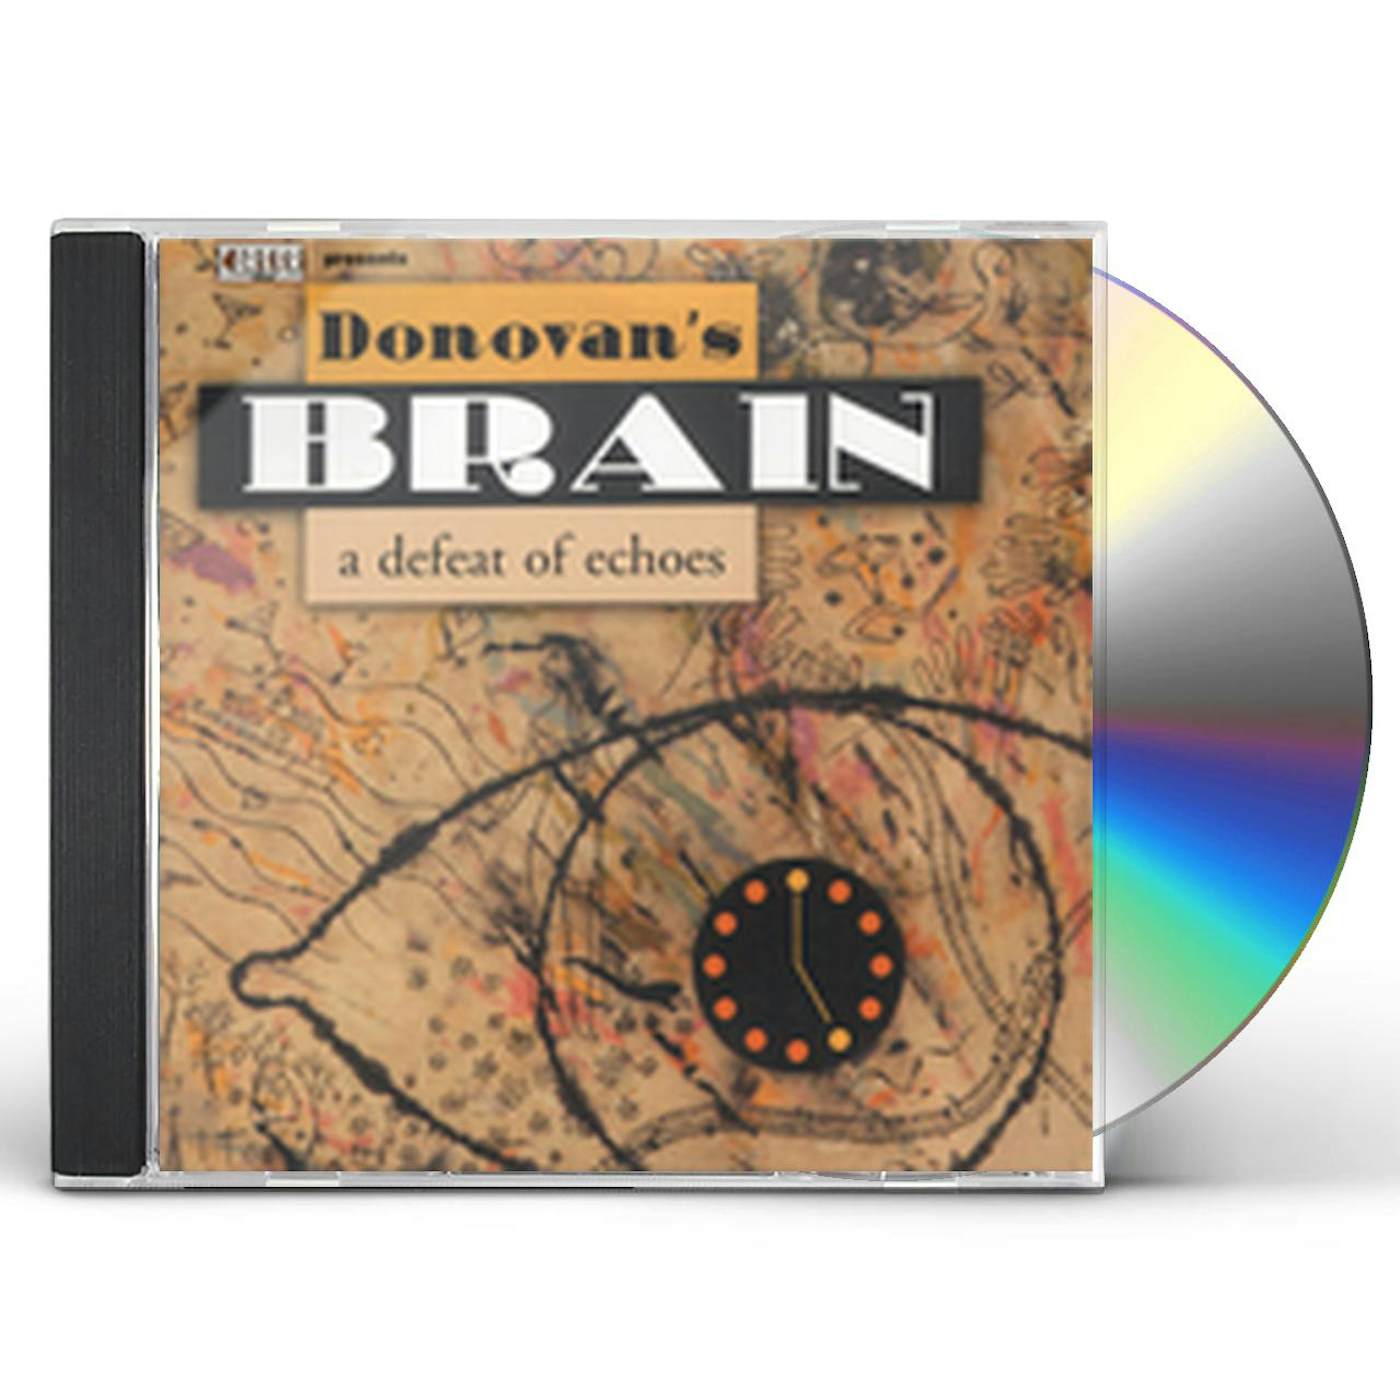 Donovan's Brain DEFEAT OF ECHOES CD